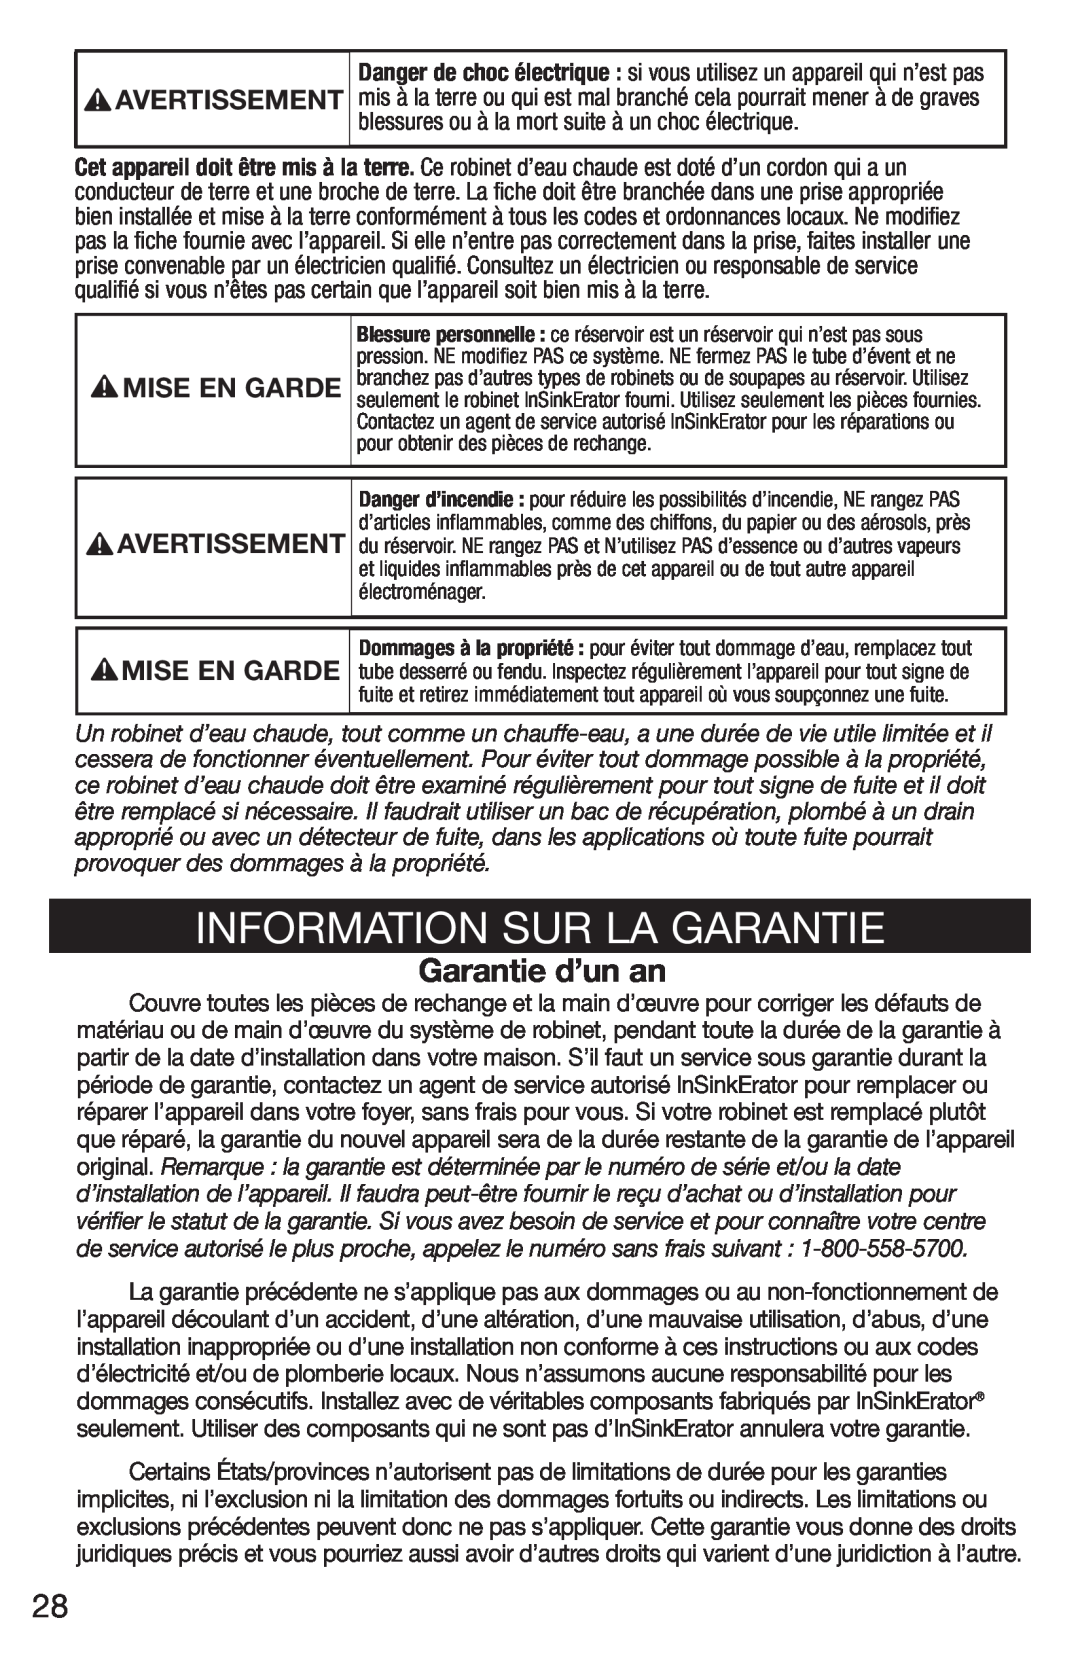 Emerson UWL owner manual Information Sur La Garantie, Garantie d’un an, Avertissement, Mise En Garde 